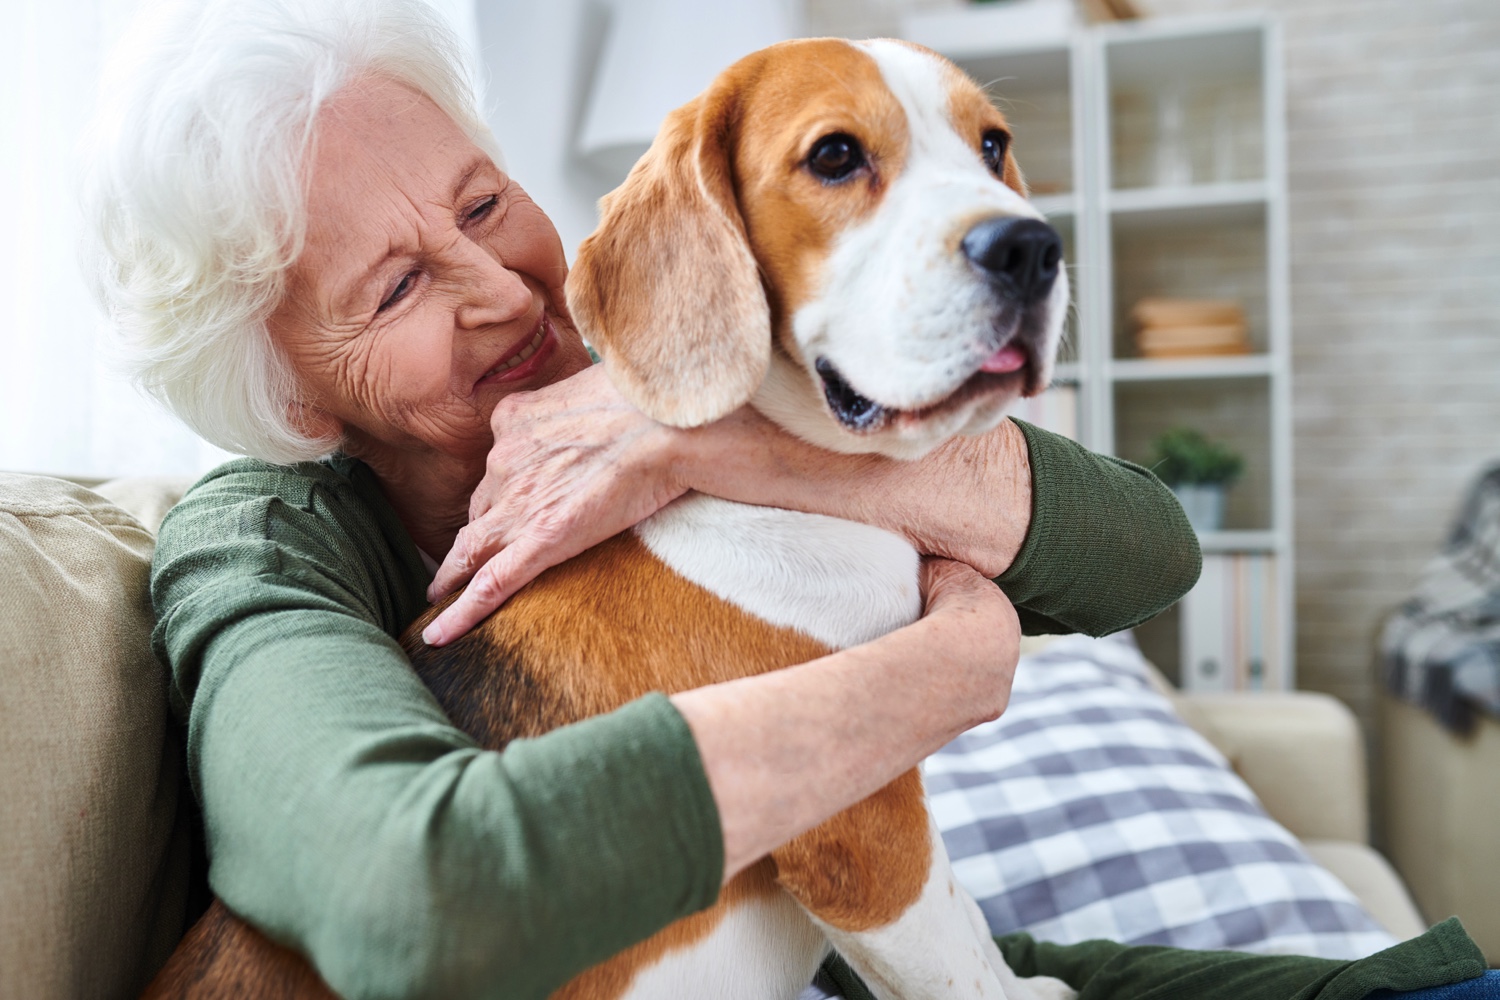 Senior woman hugging a dog in a senior living community apartment.